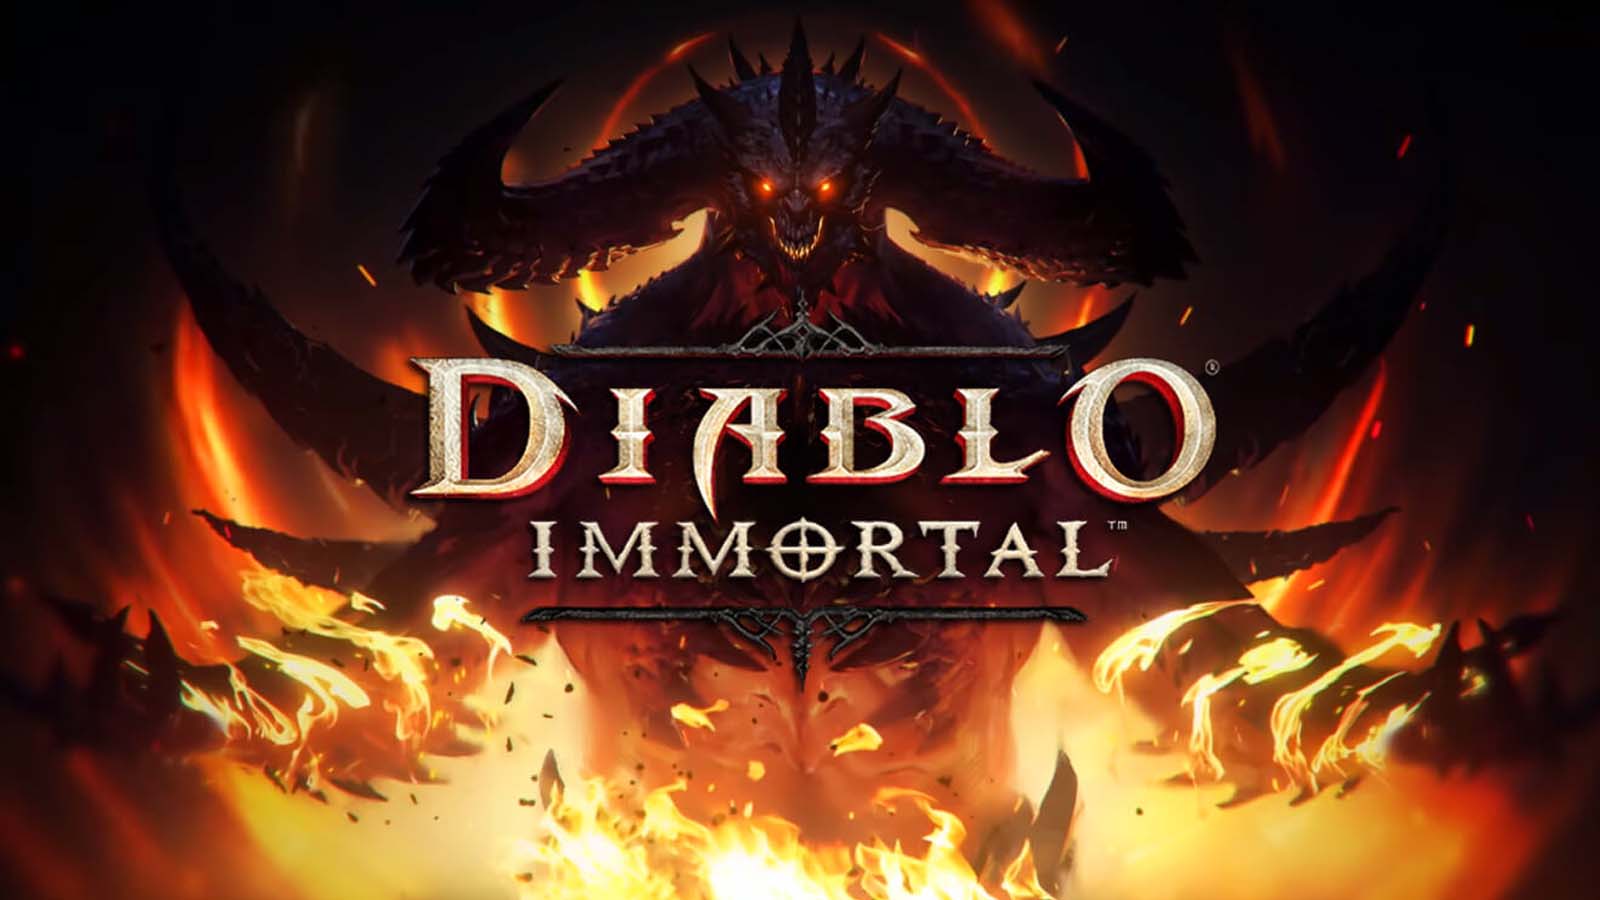 Дата выхода Diablo Immortal всплыла в Apple Store?